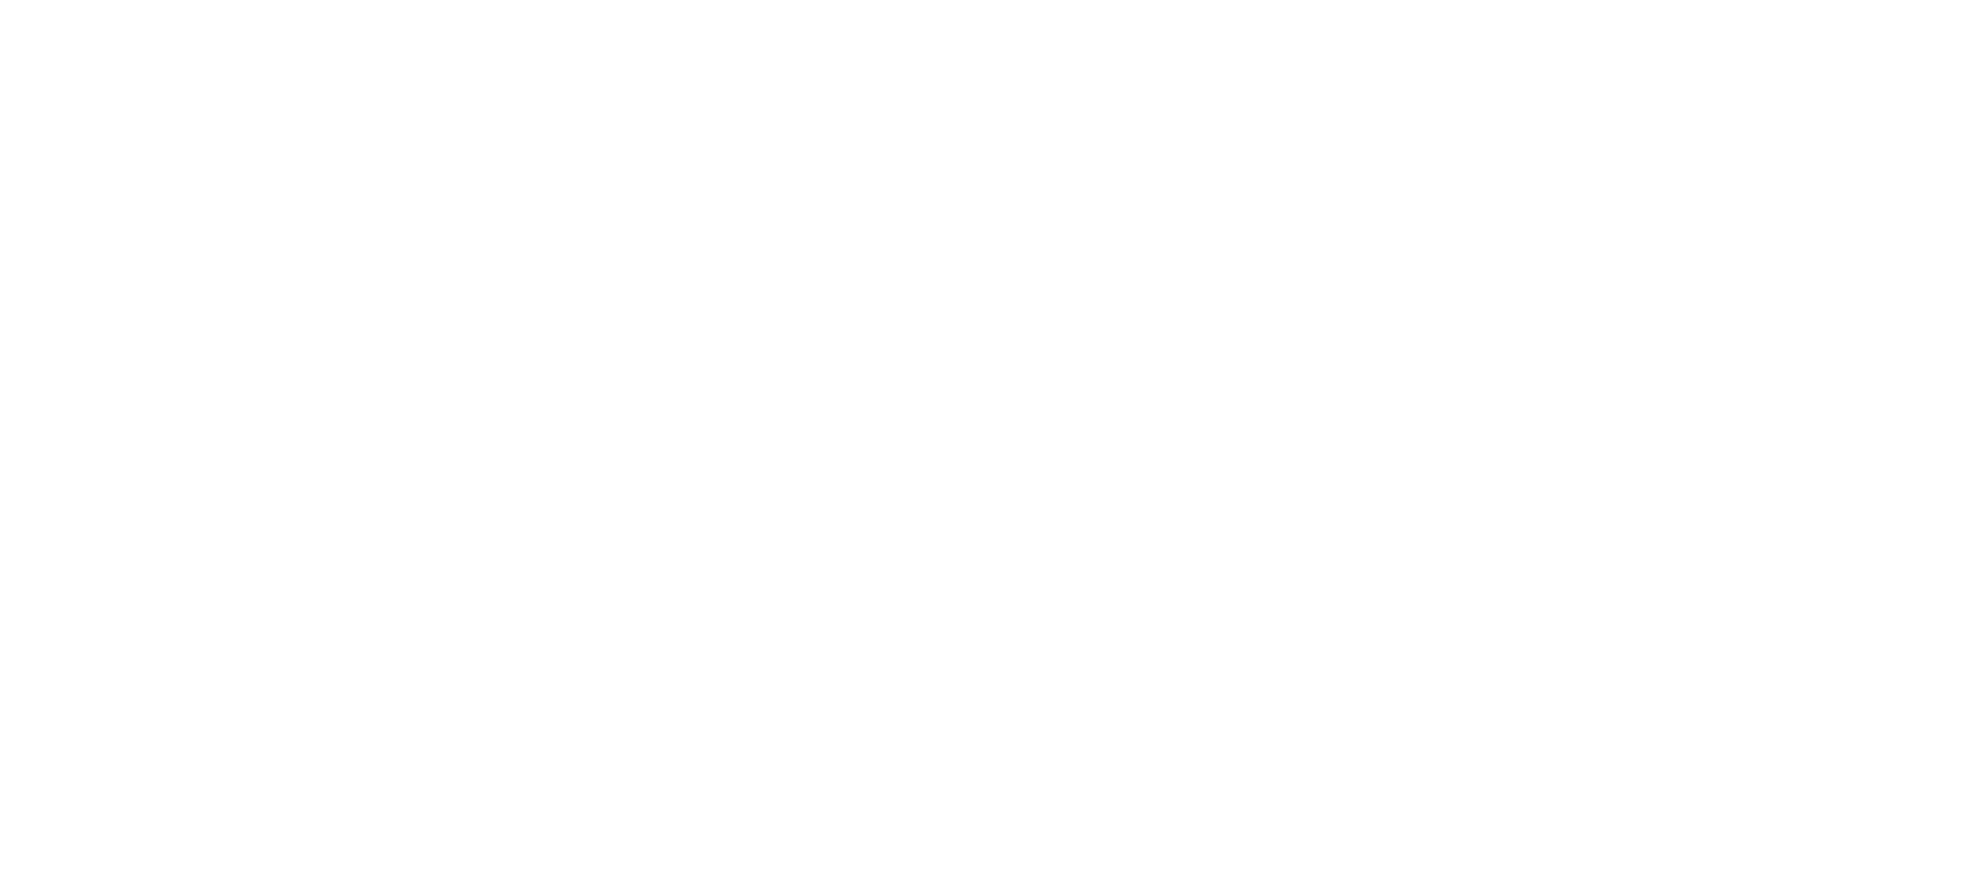 Azalara – Distributor of the Premium Supplements in Asia